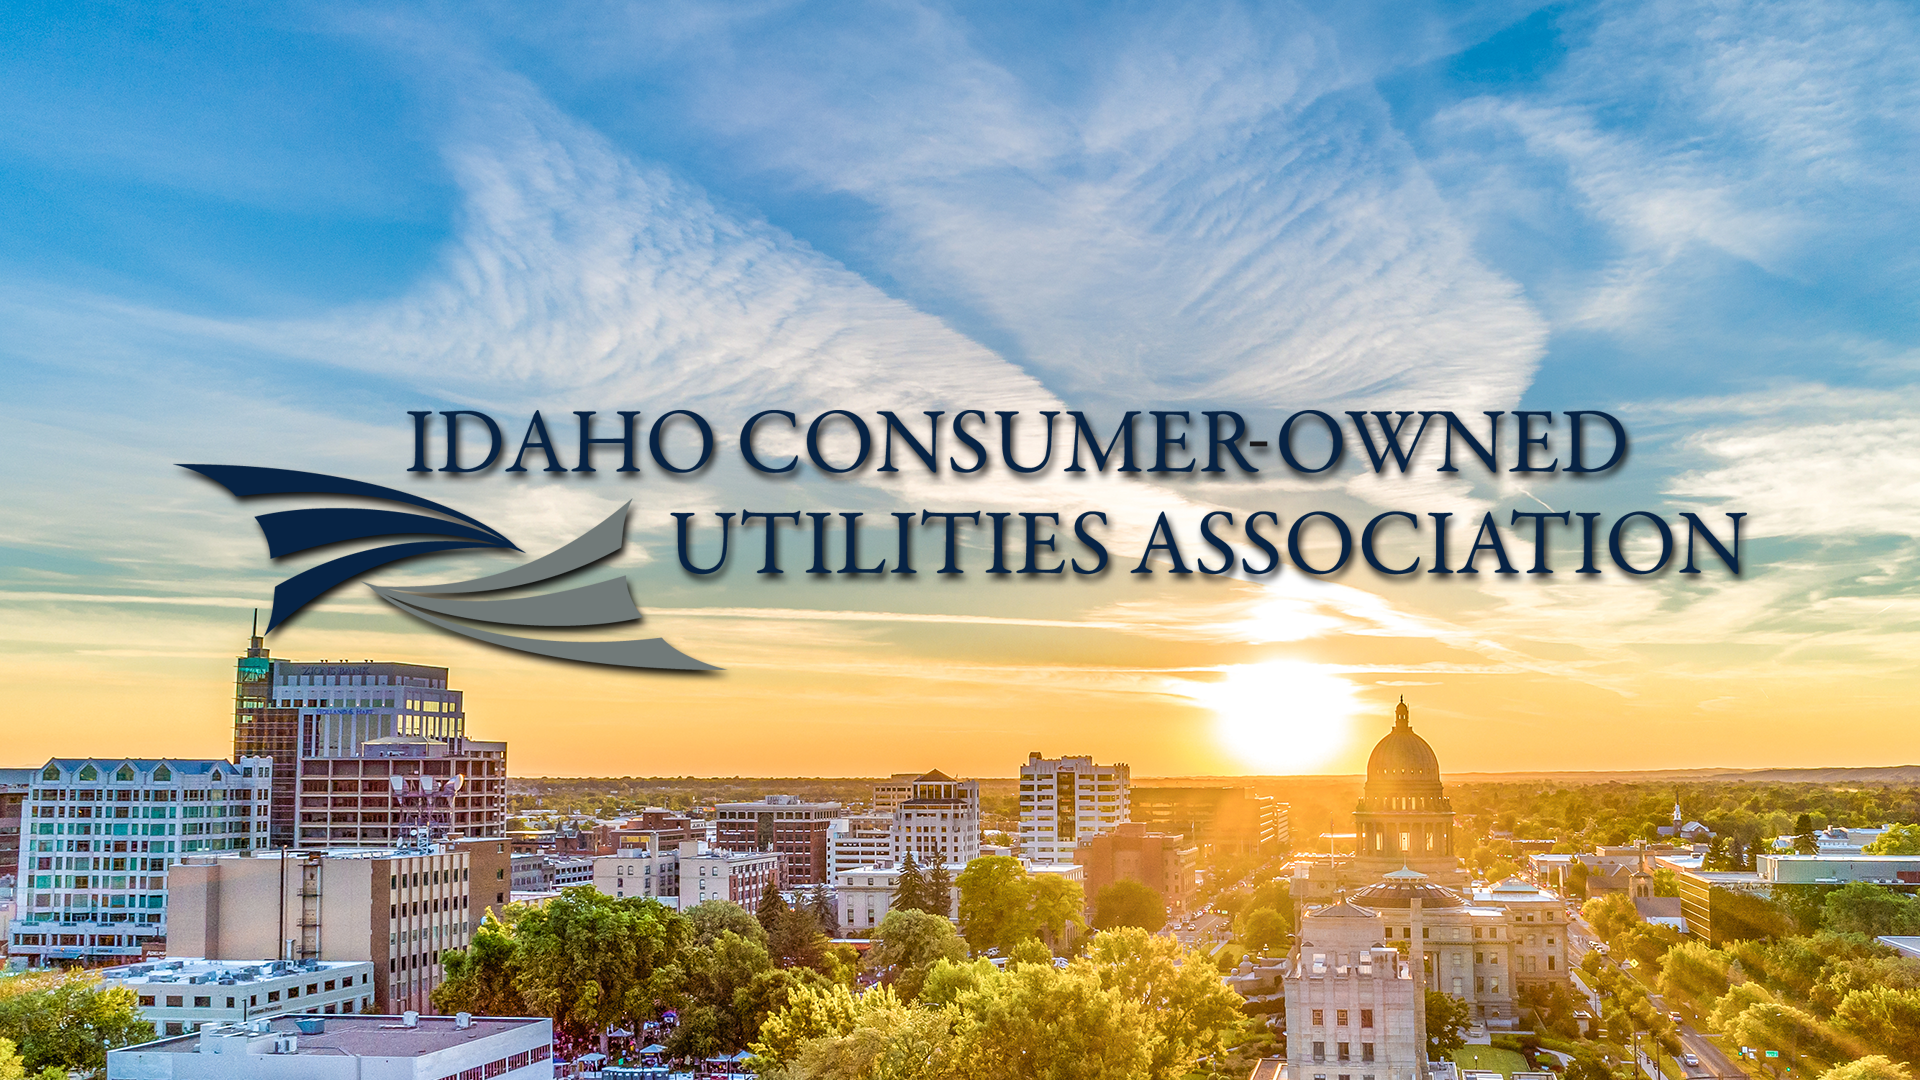 Idaho Consumer-Owned Utility Association (ICUA) Annual Meeting